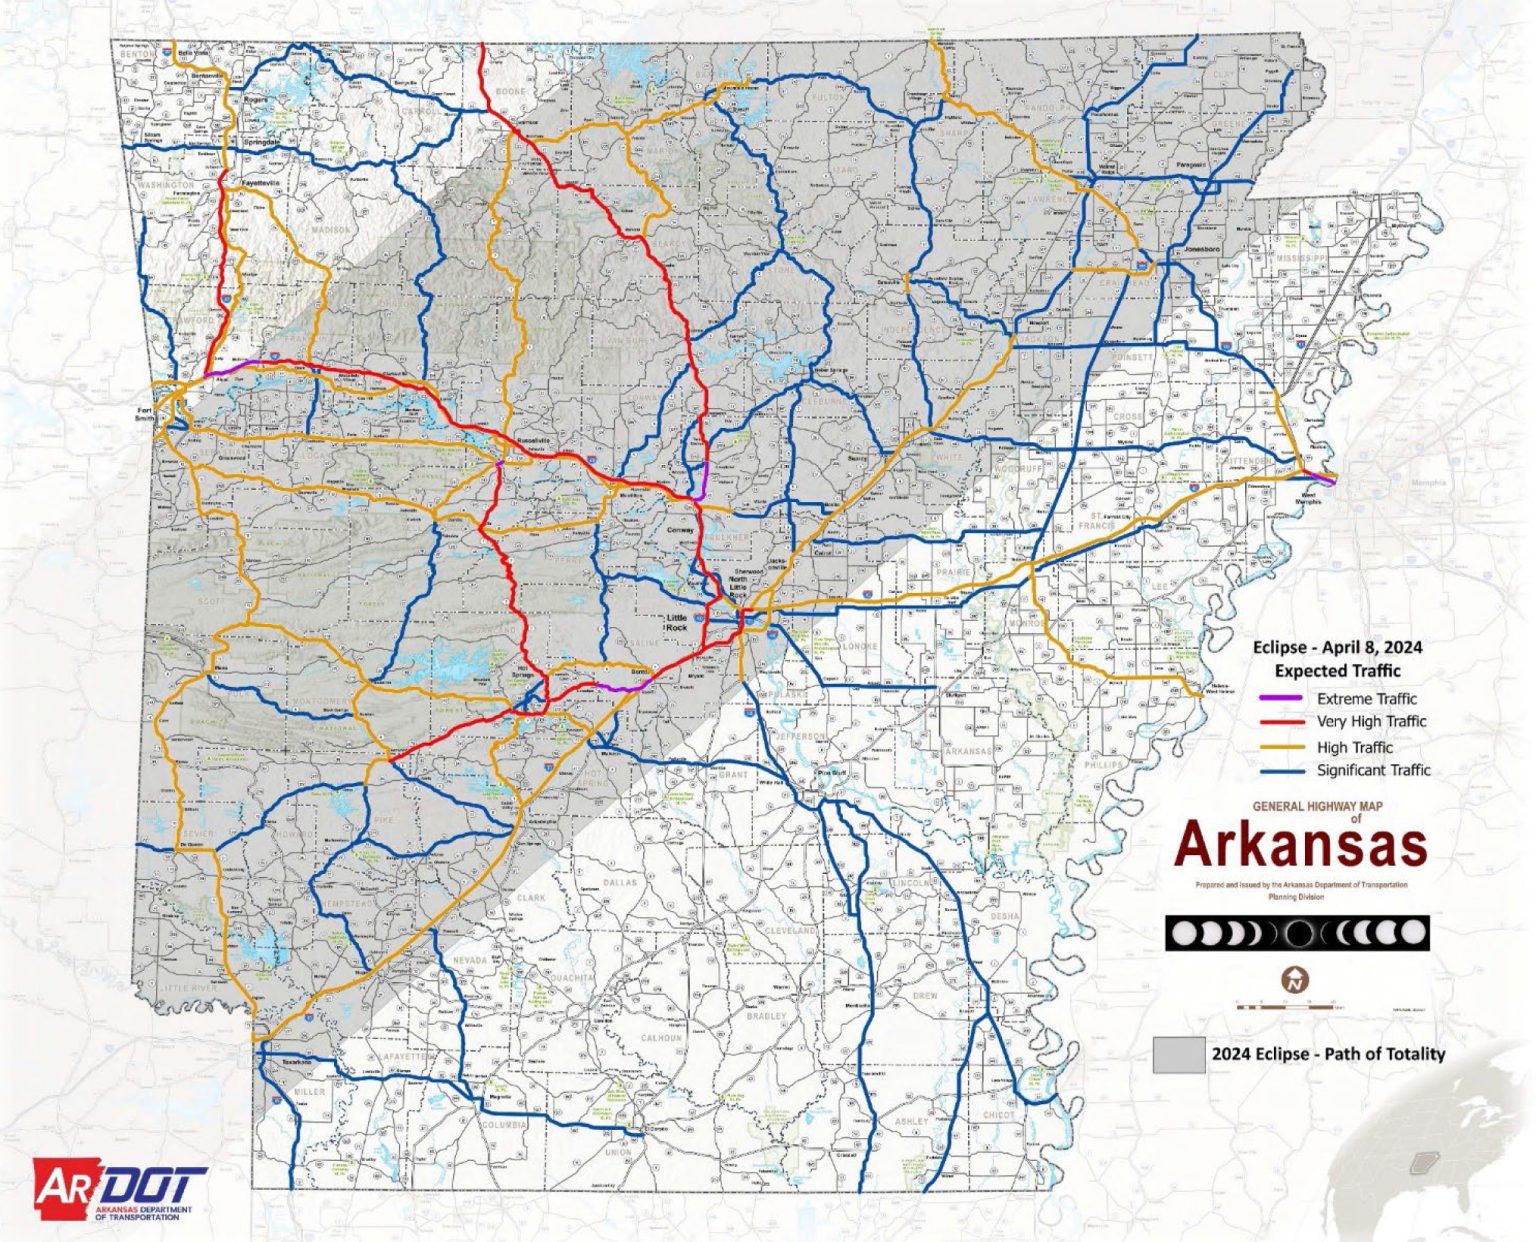 ARDOT issues traffic plan for 2024 eclipse Southwest Arkansas News